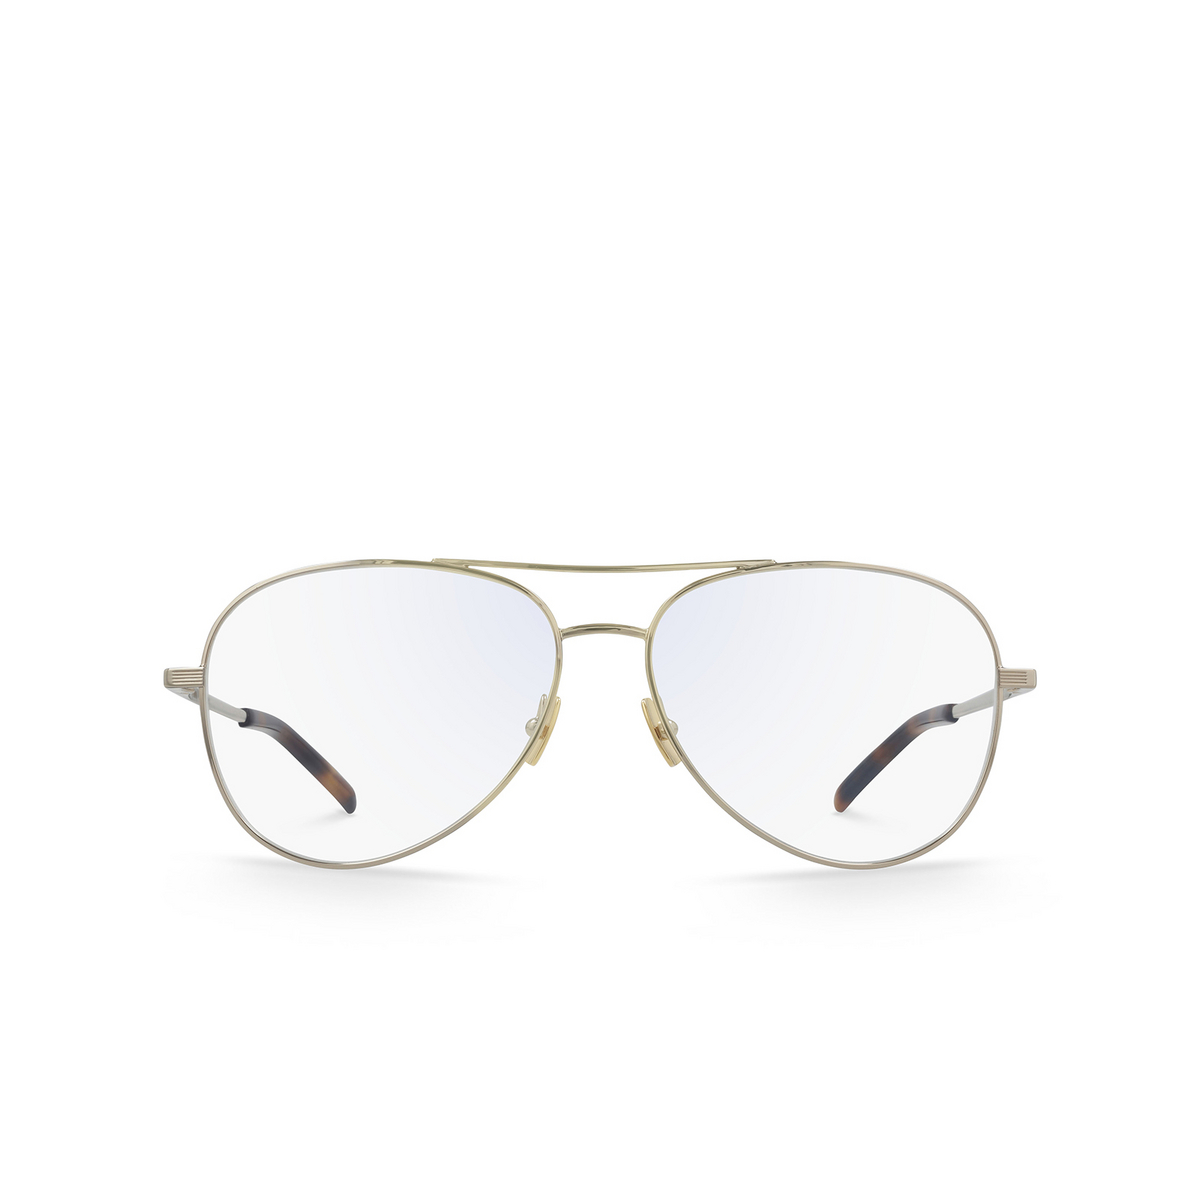 Saint Laurent® Aviator Eyeglasses: SL 153 color 002 Gold - front view